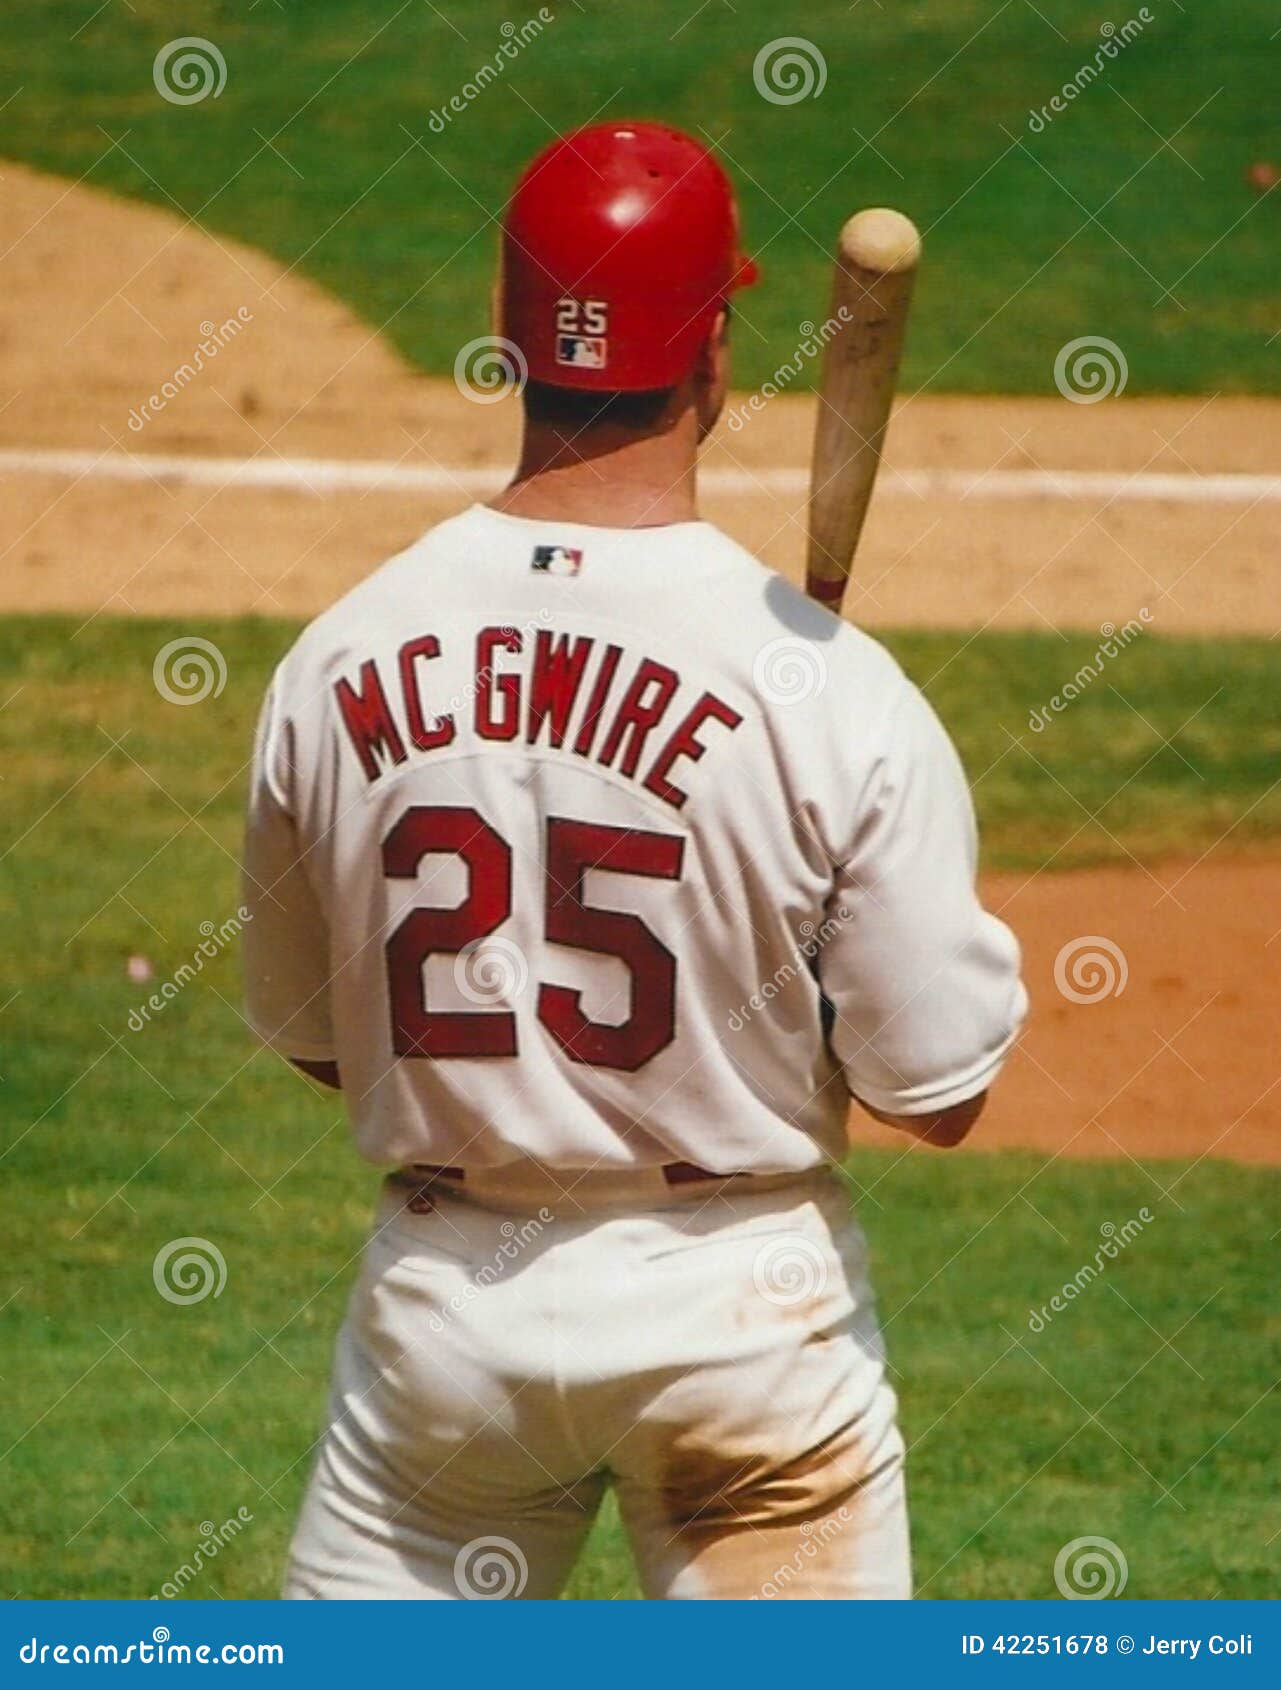 mark mcgwire batting